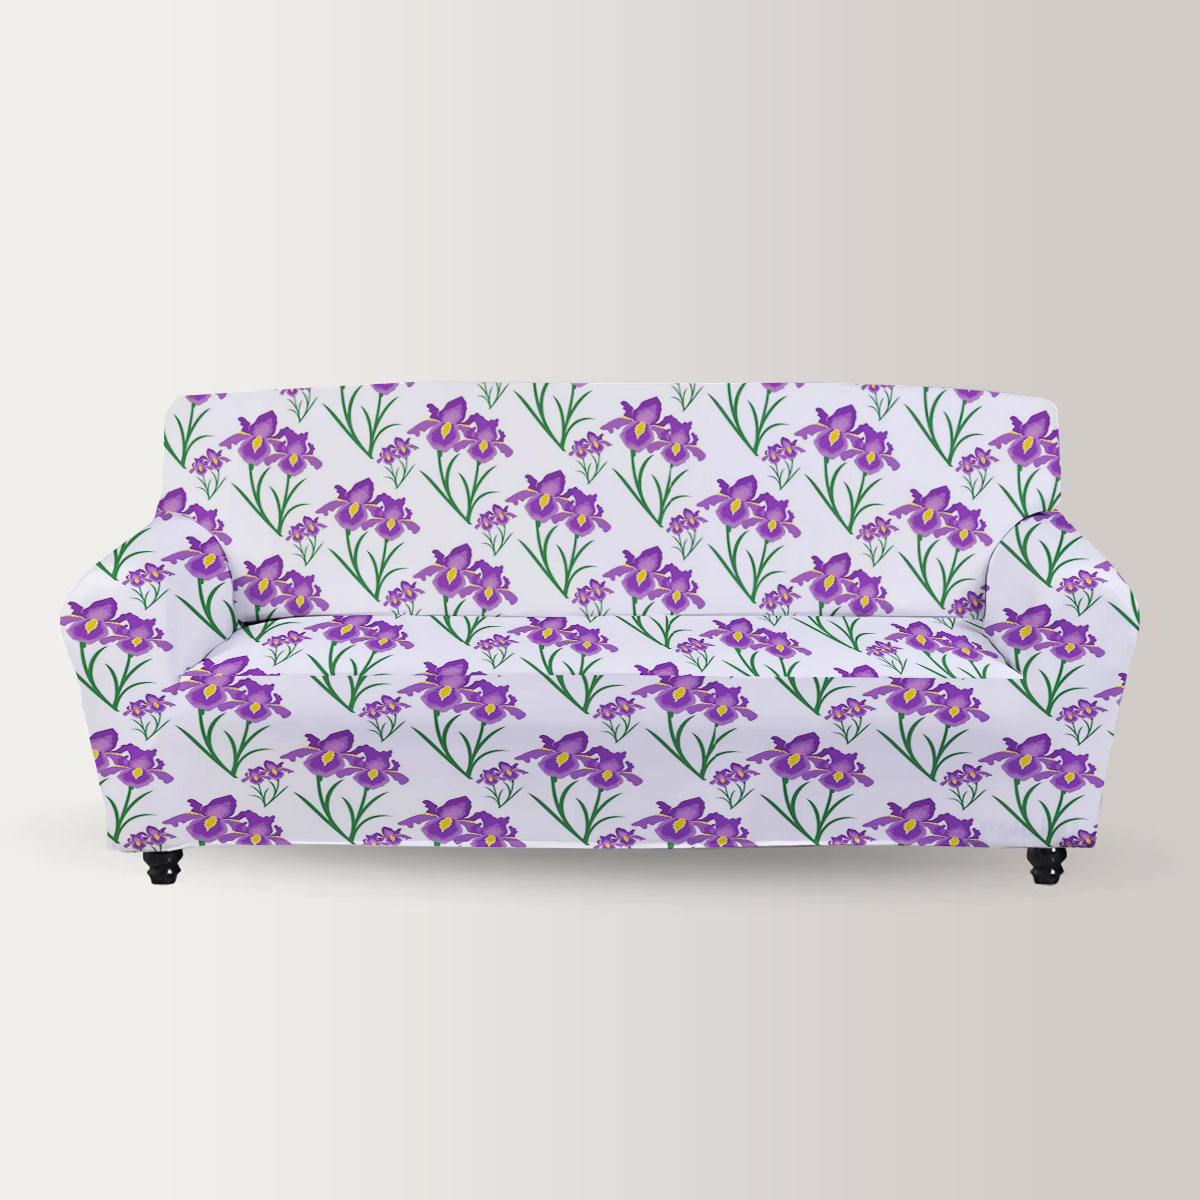 Iris Flower With Leaf Sofa Cover